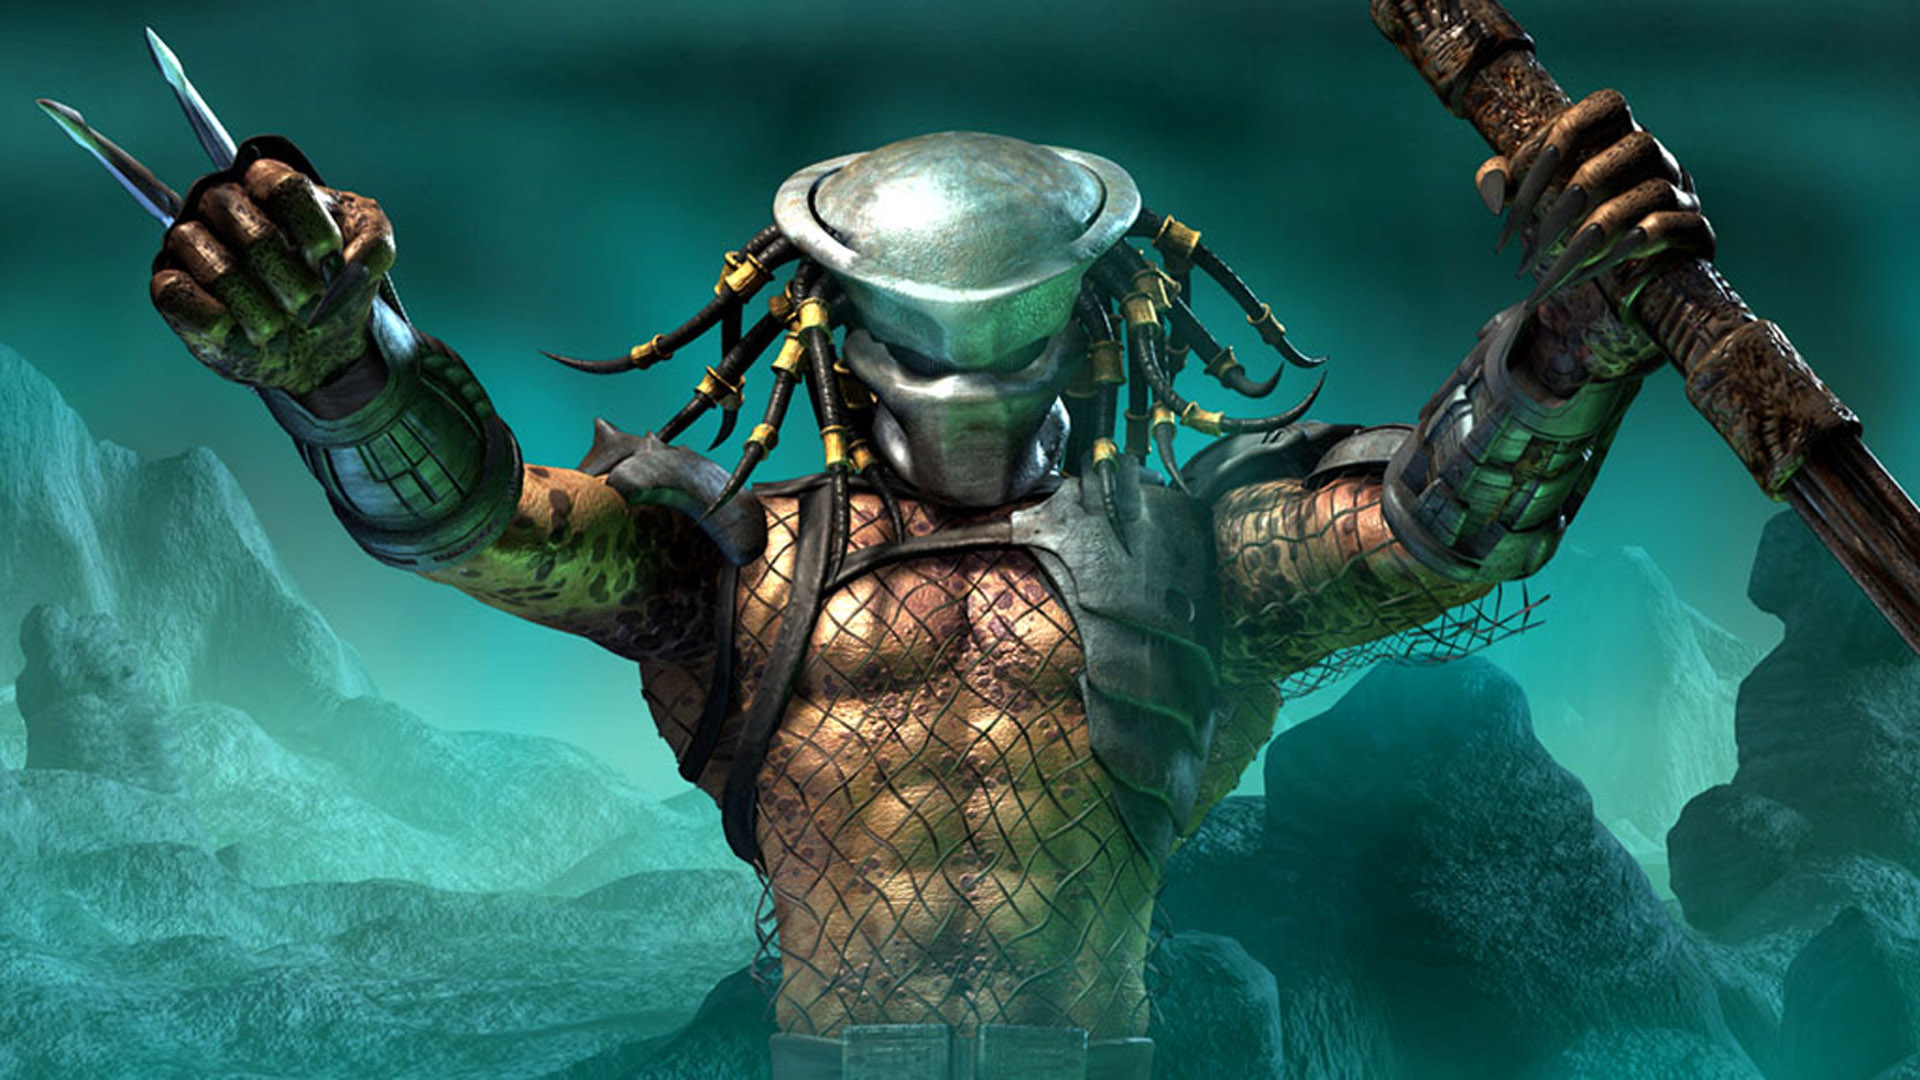 Video Game Aliens Versus Predator 2 HD Wallpaper | Background Image